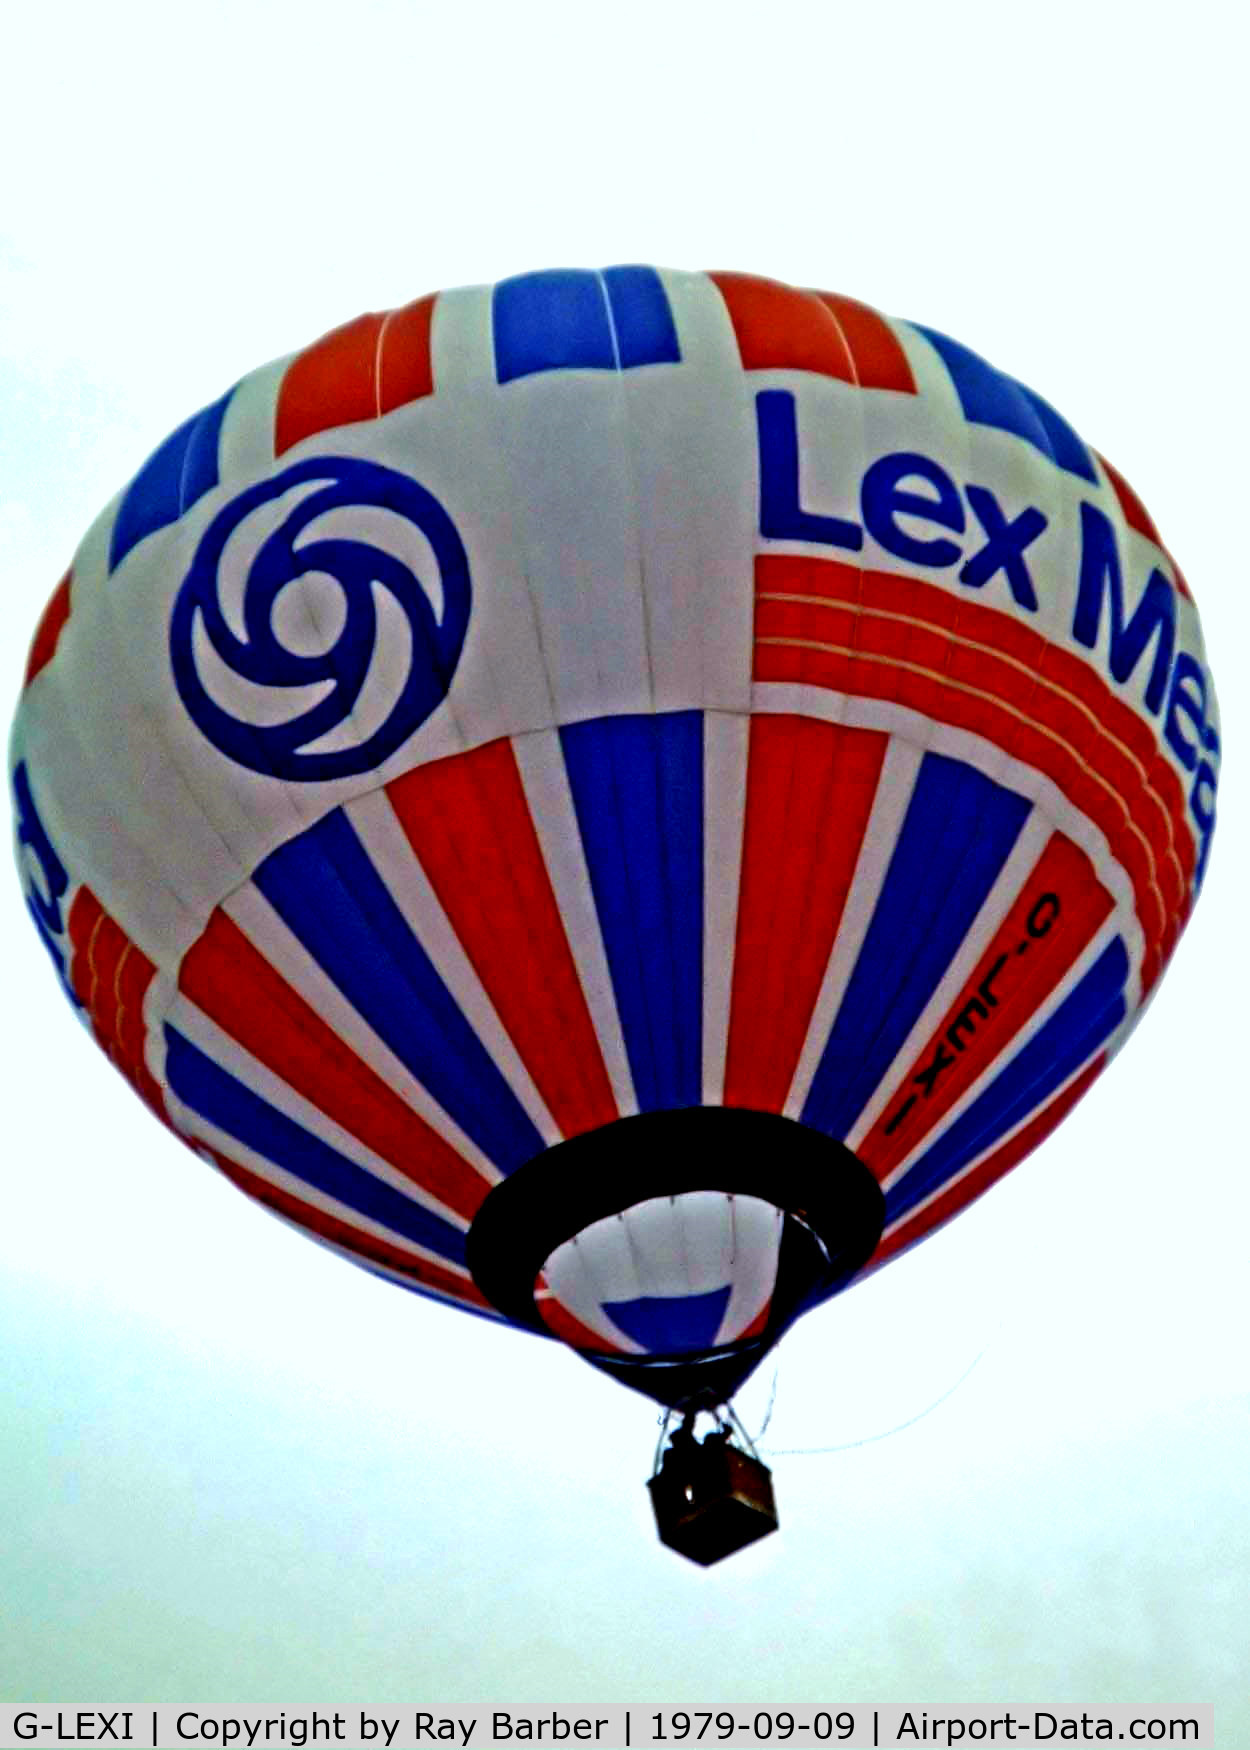 G-LEXI, 1978 Cameron Balloons N-77 C/N 438, Cameron N-77 HAFB [438] Ashton Court~G 09/09/79. Image taken from a slide.